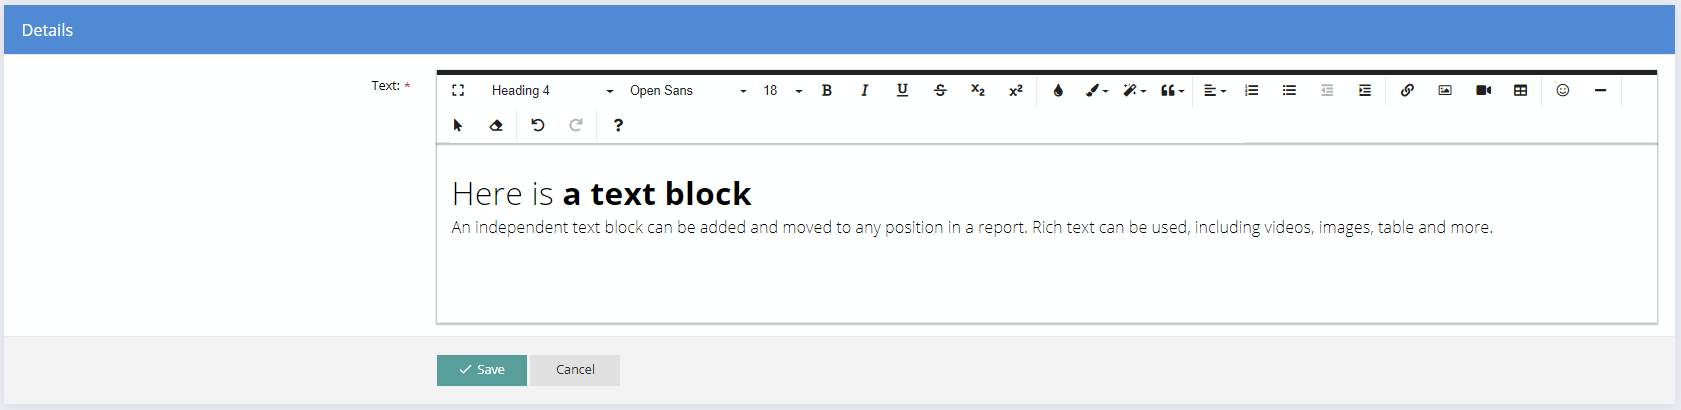 Survey Software Text Block